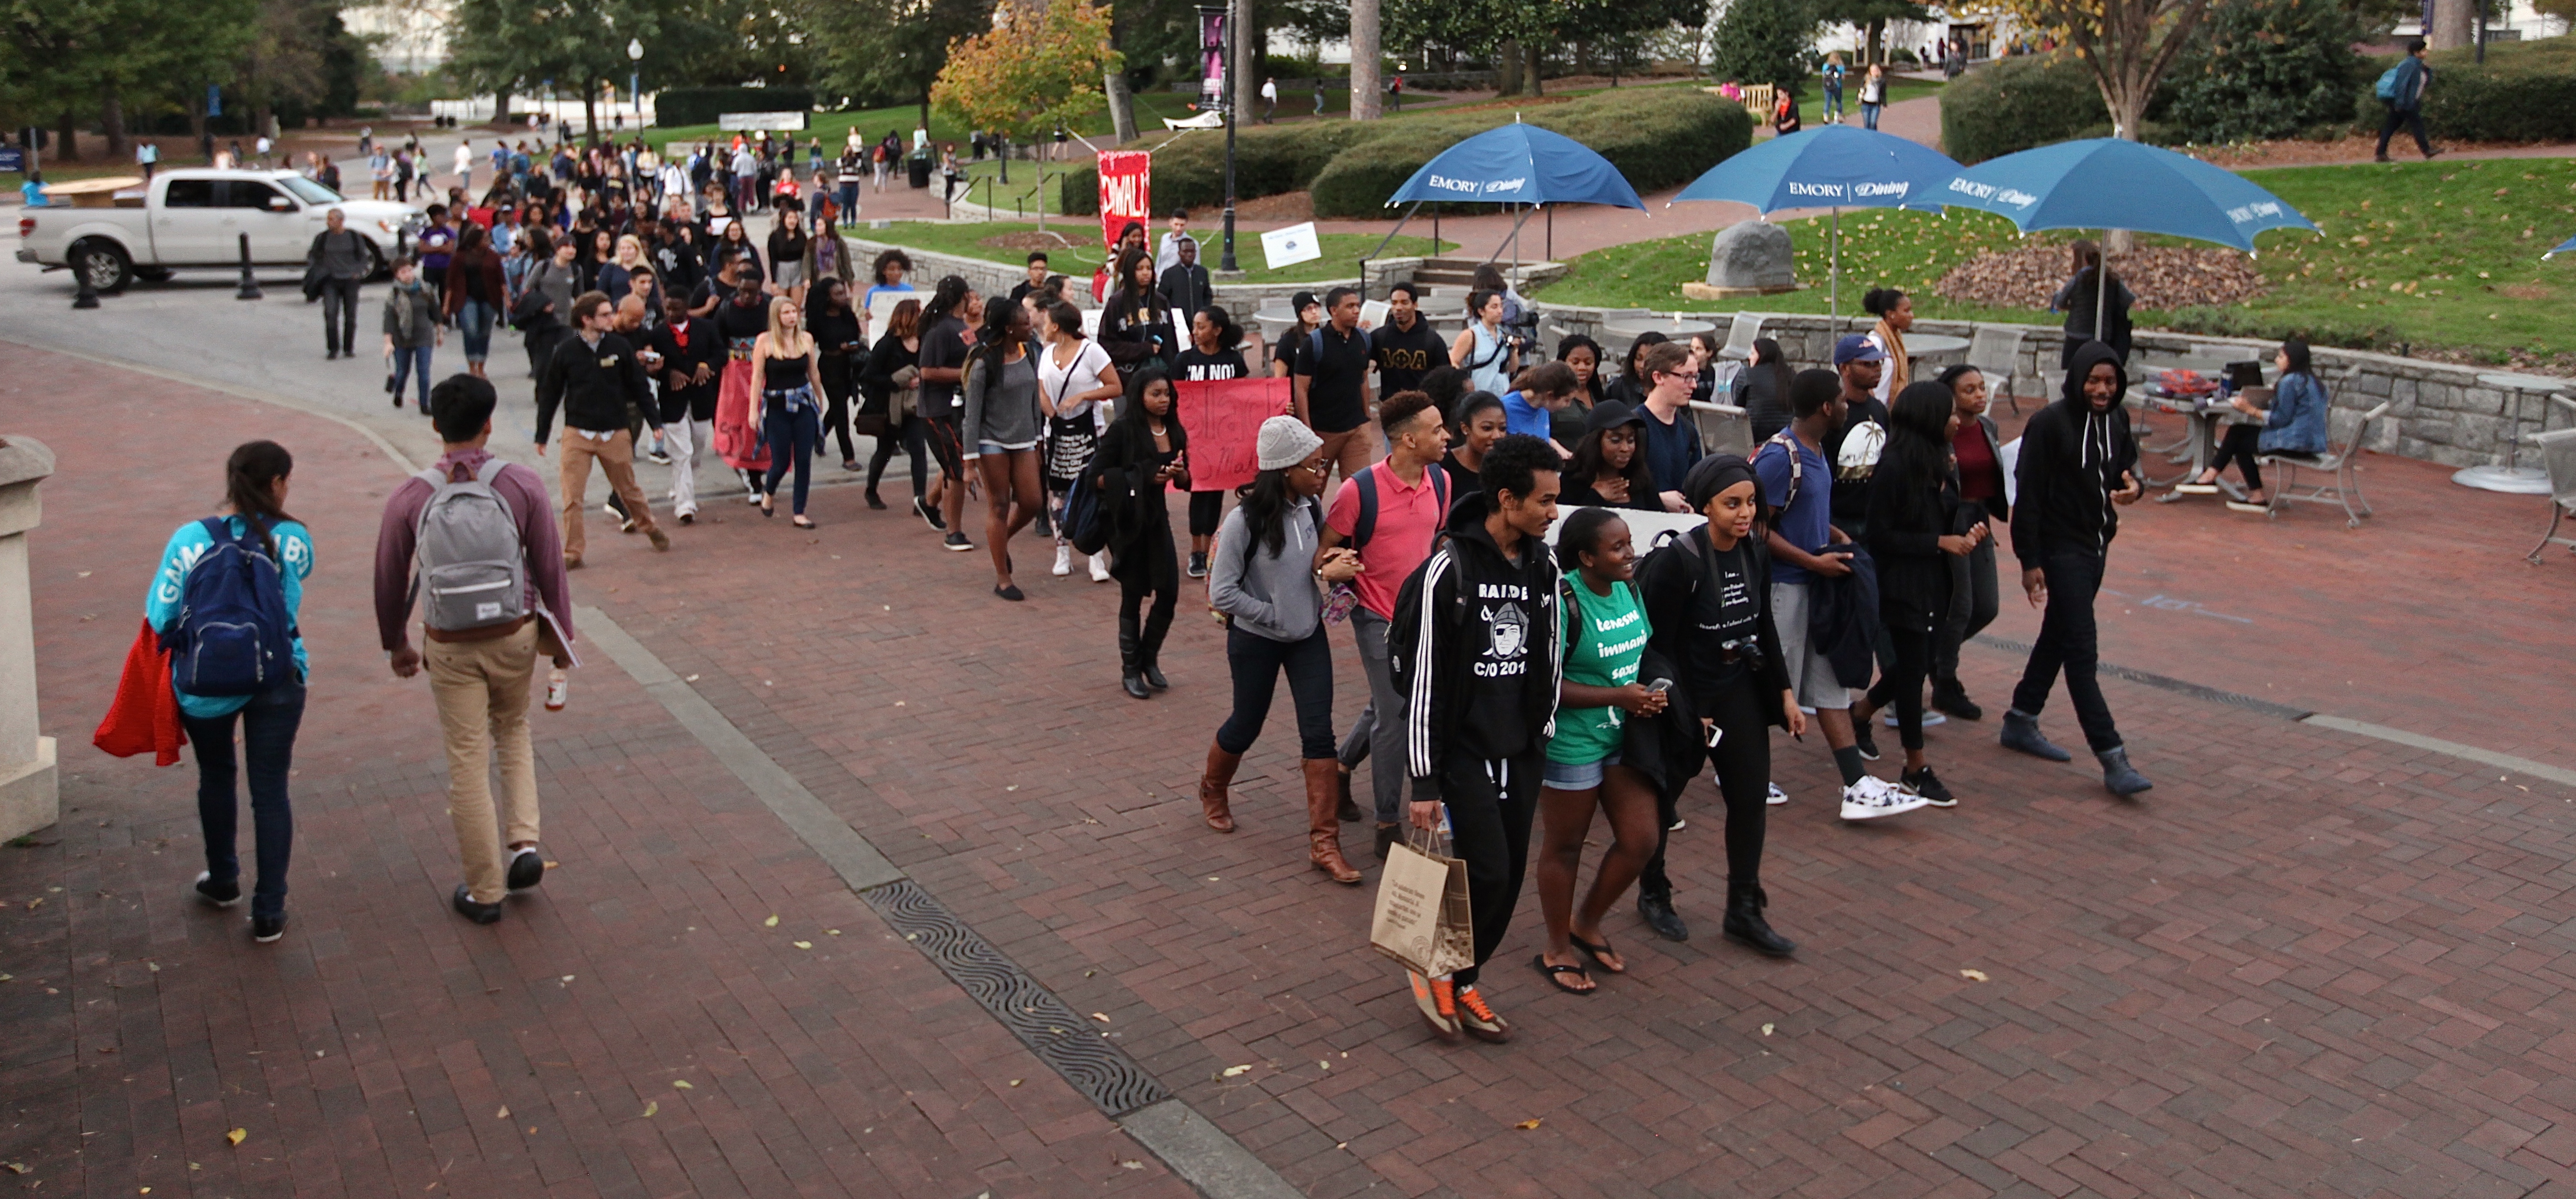 A Response to Black Student Activist Demands